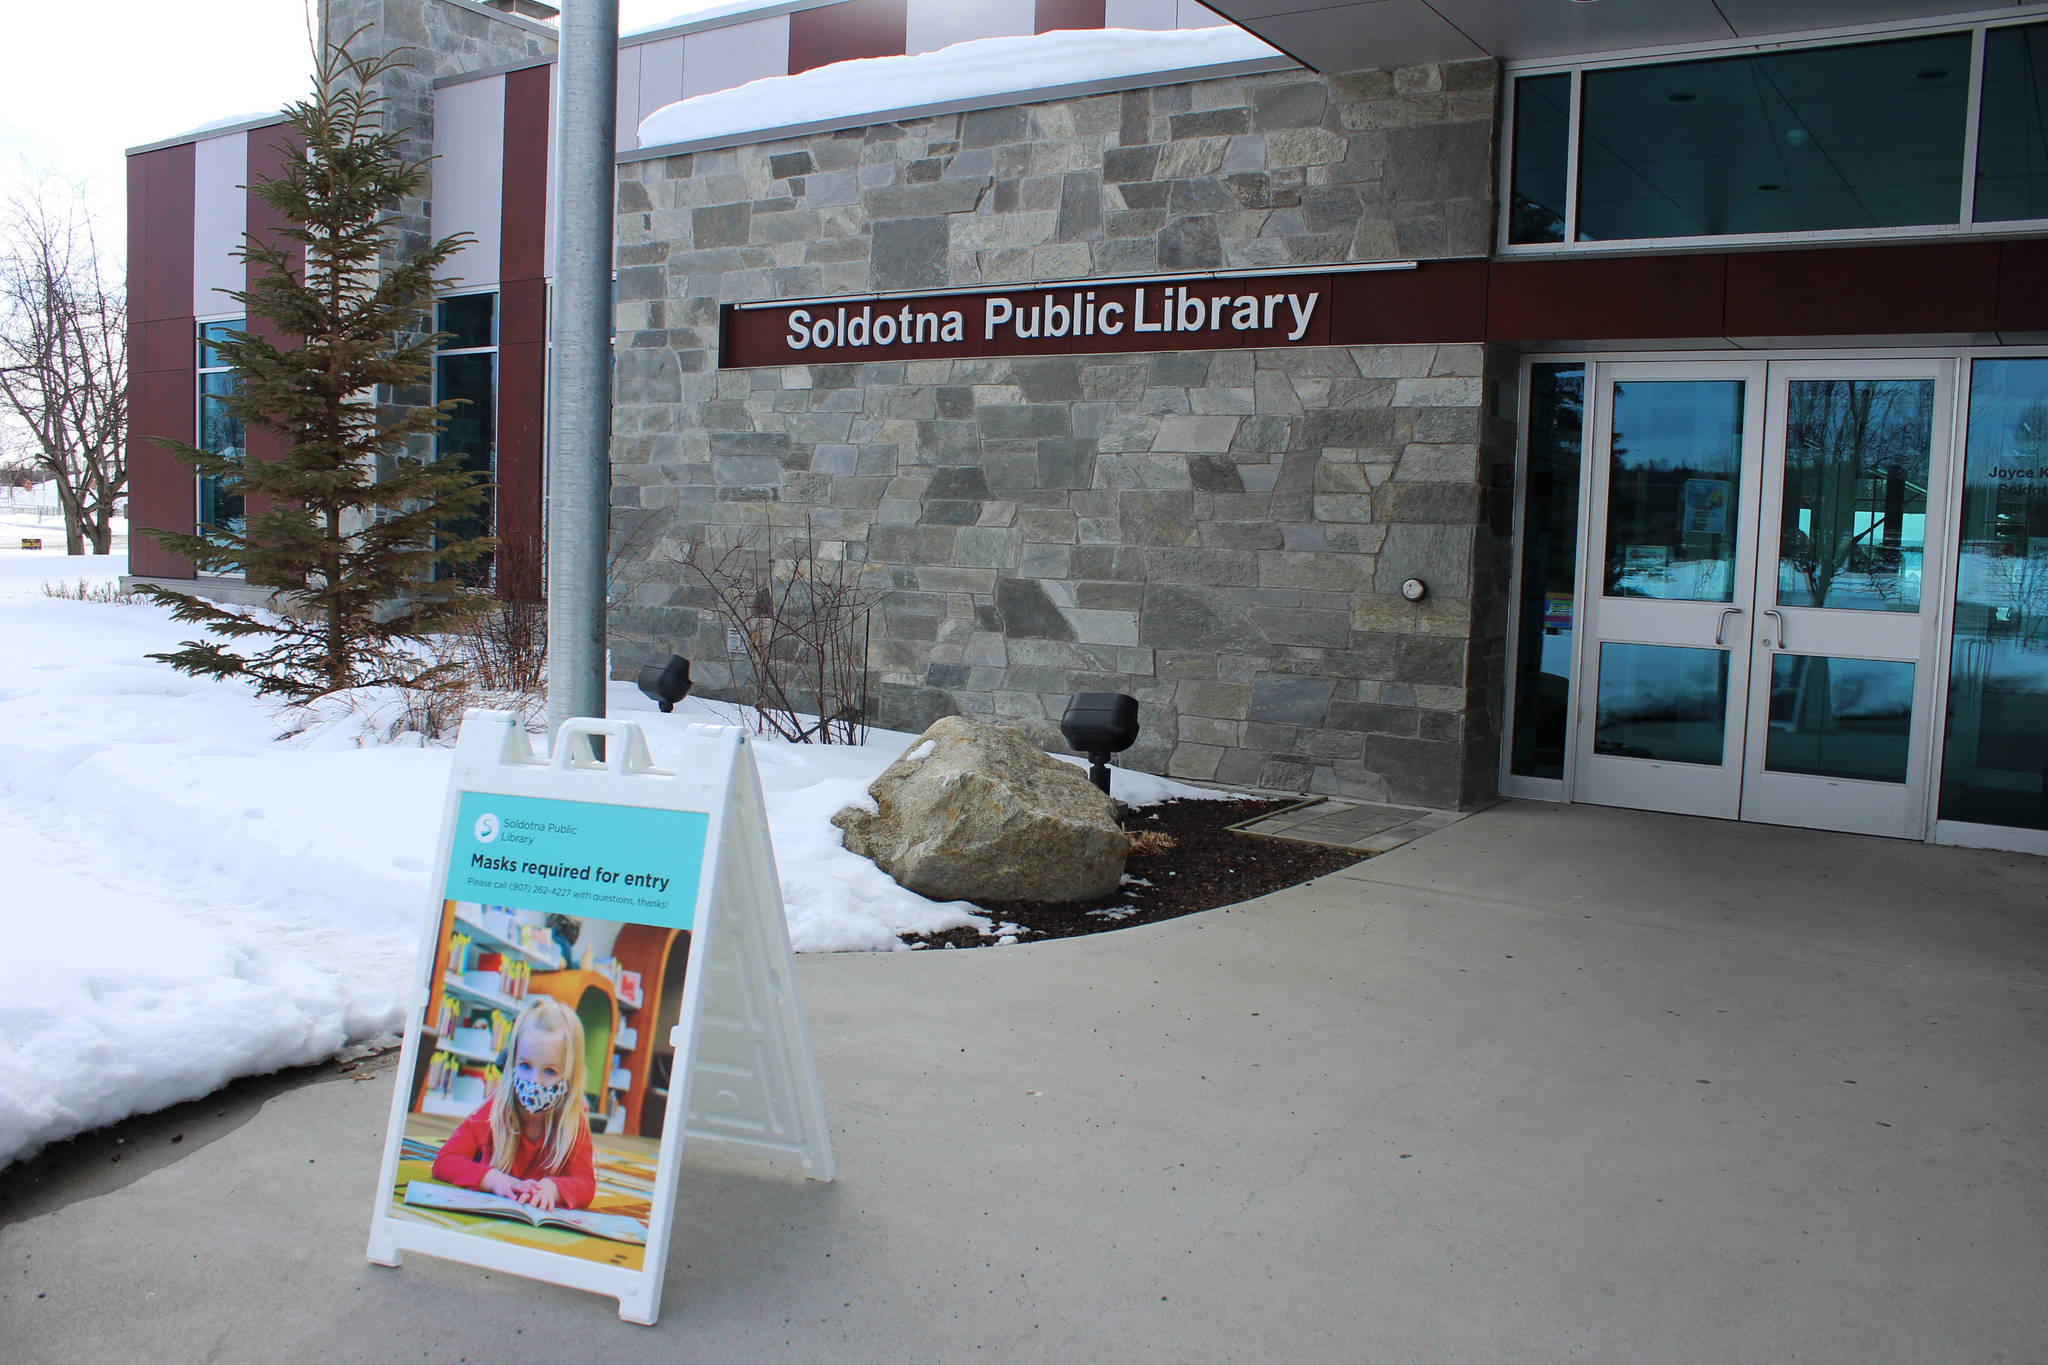 Ashlyn O’Hara/Peninsula Clarion 
The entrance to Soldotna Public Library is seen on Thursday, March 25, 2021 in Soldotna, Alaska.